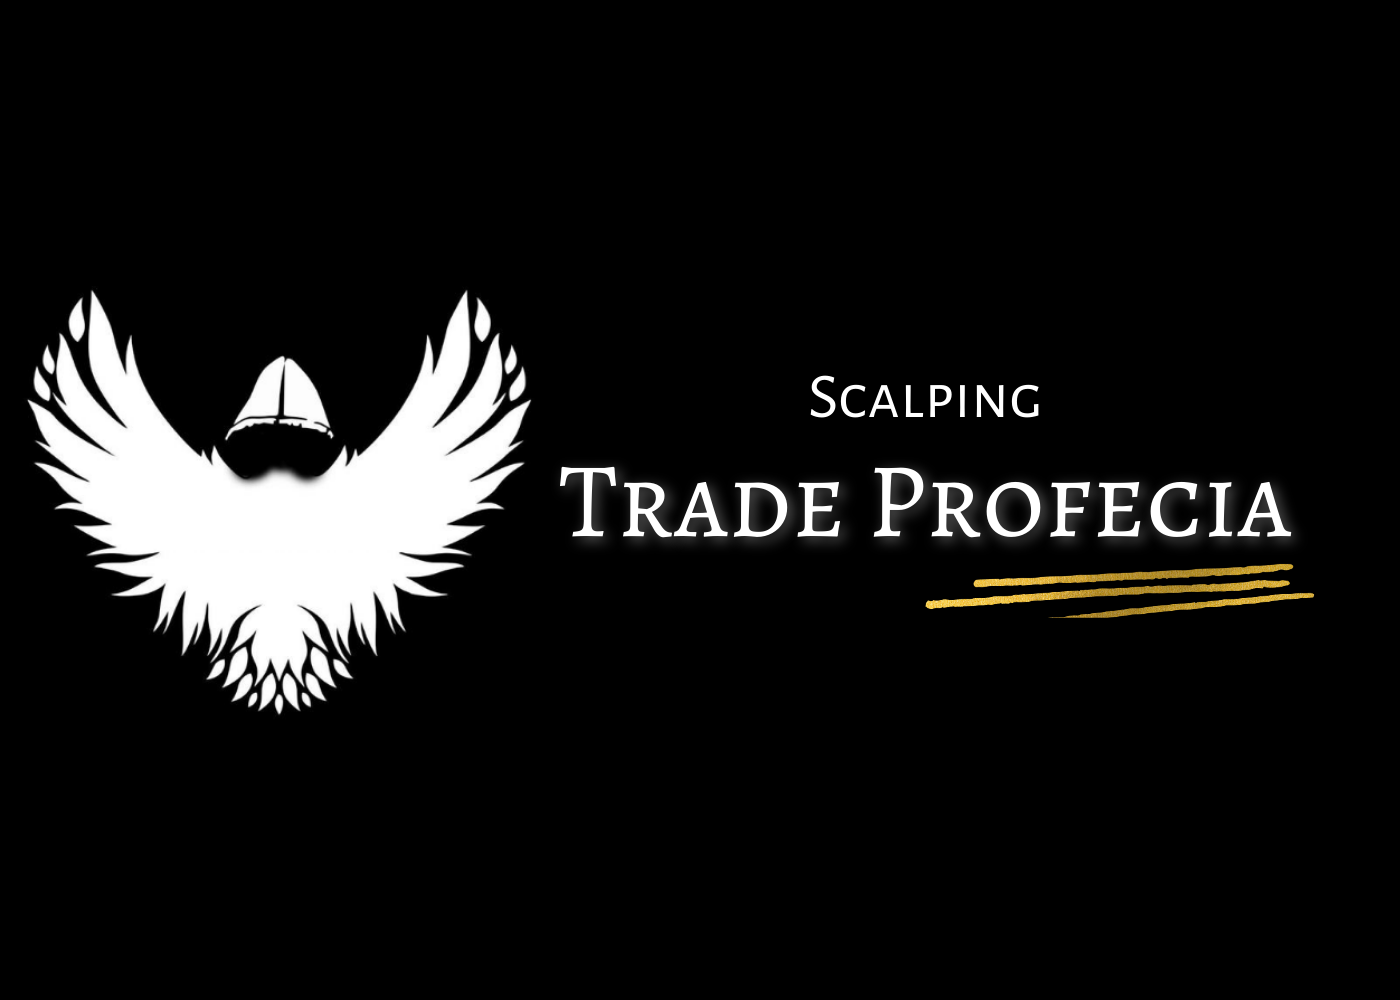 Trade Profecia (Igor Fernandes) - Estratégia Trade Profecia - Scalping